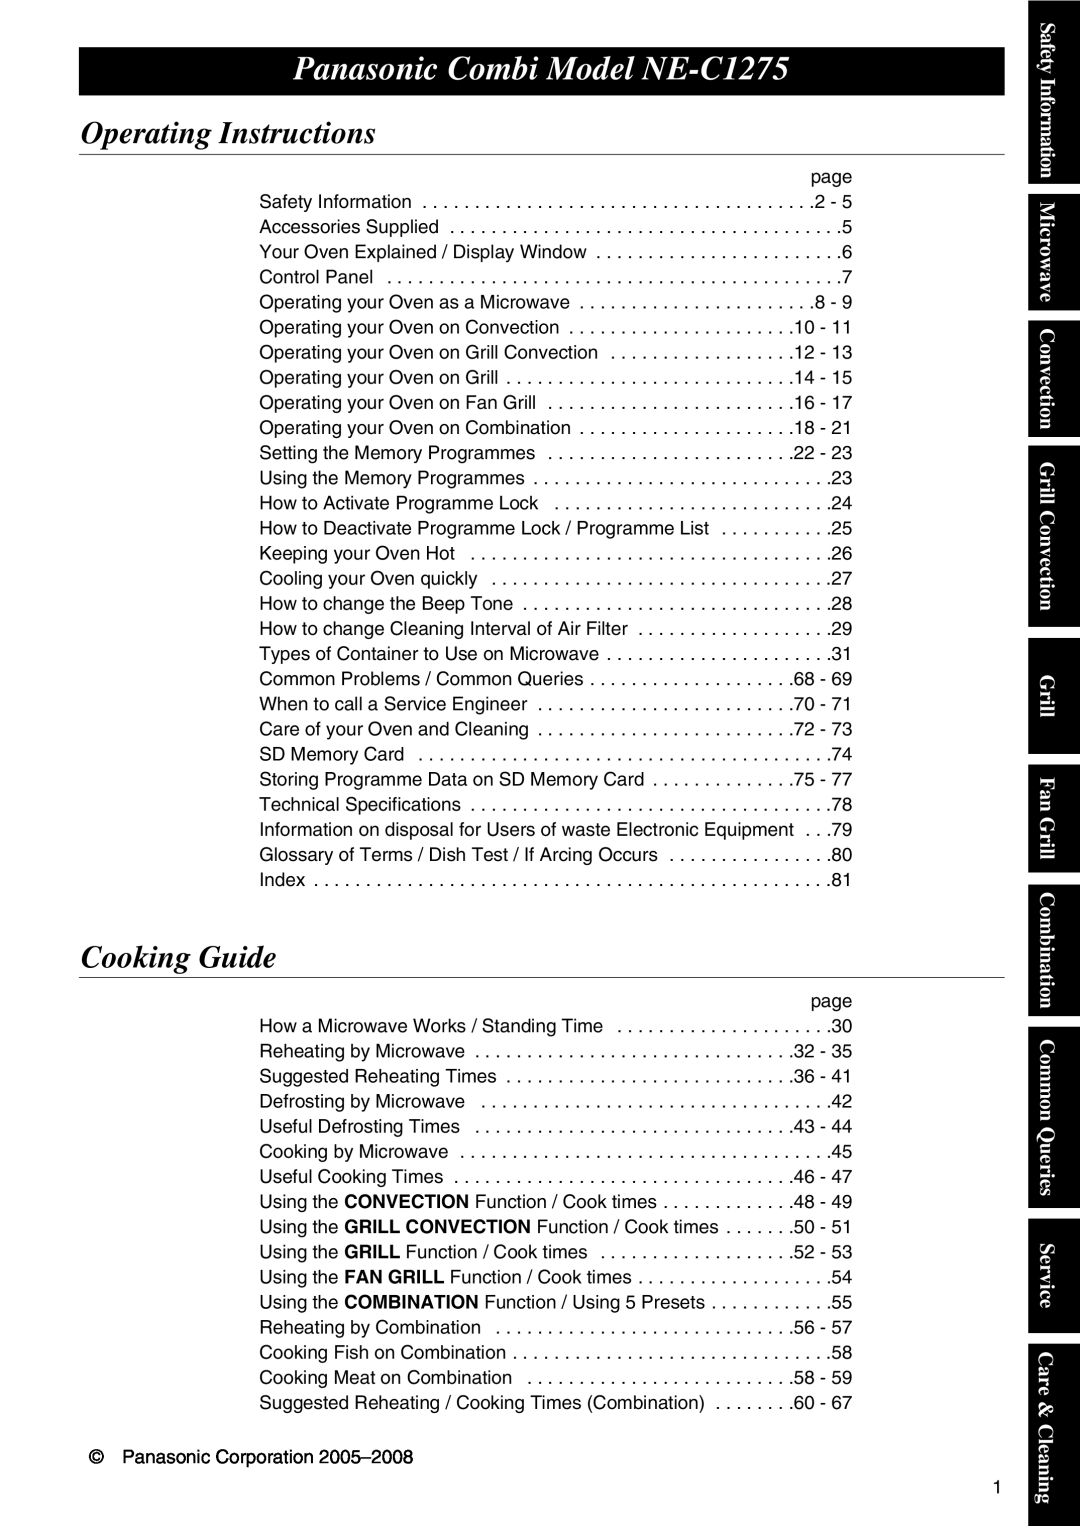 Panasonic operating instructions Panasonic Combi Model NE-C1275, Operating Instructions, Cooking Guide 